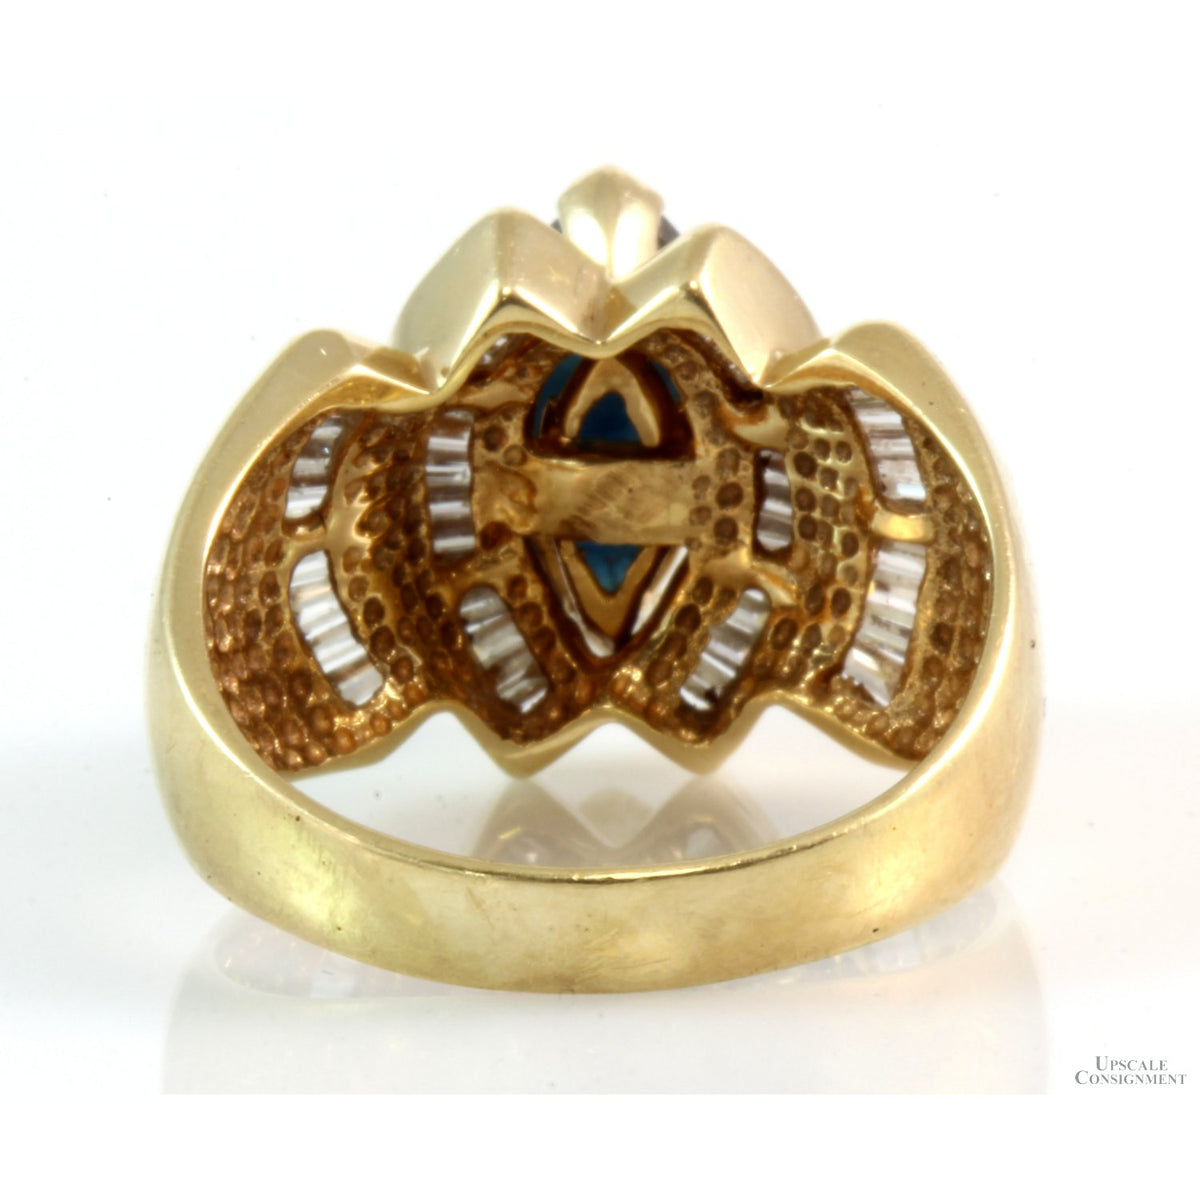 2.13ct Blue Sapphire 1.01ctw Diamond 14K Yellow Gold Two-Tier Ring